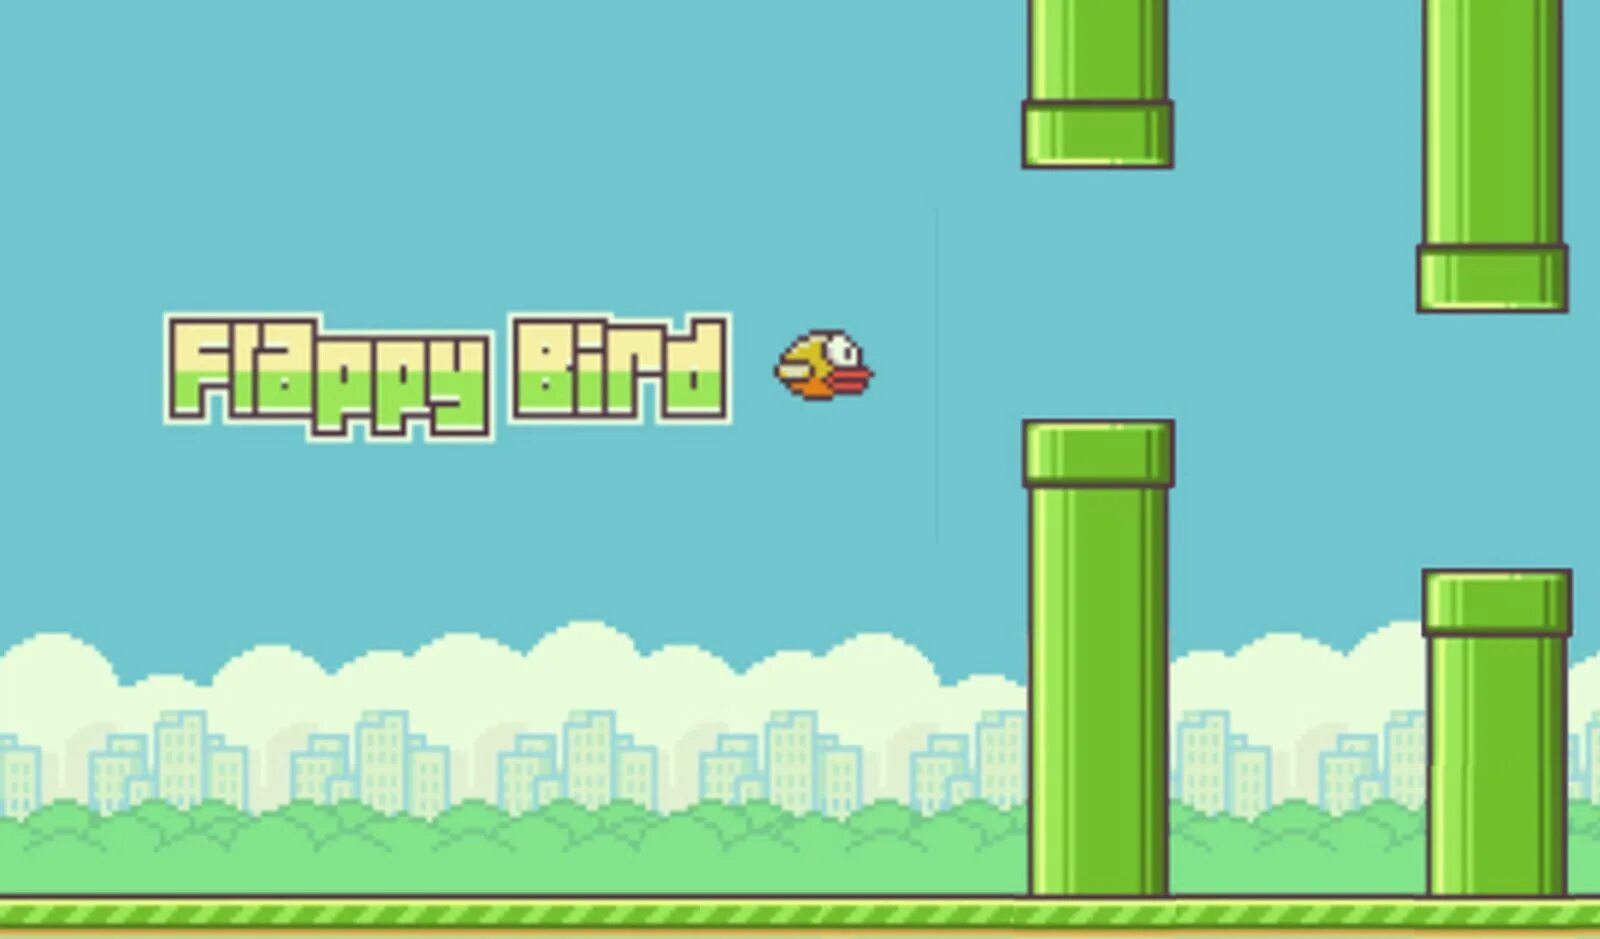 Игра flappy bird. Флаппи бёрд. Птичка для игры Flappy Bird. Спрайт трубы Flappy Bird.